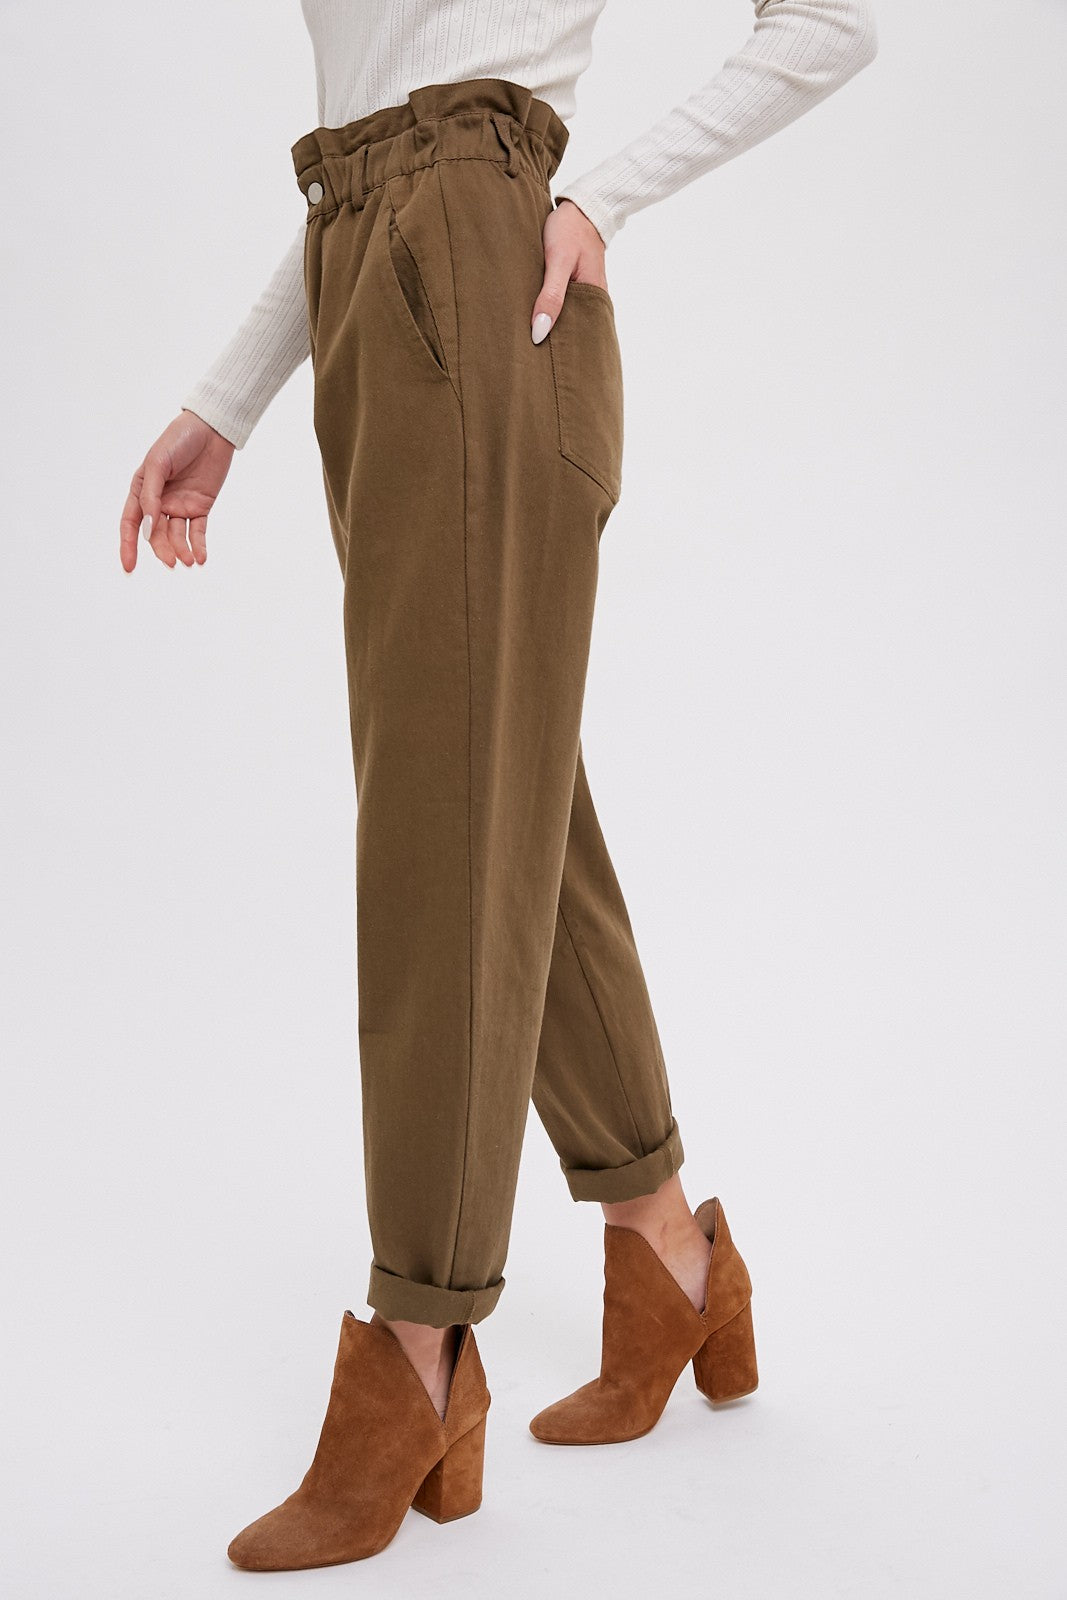 Khaki Pants - High Waist Paperbag Pants - Button Dly Closure Paperbag Pants